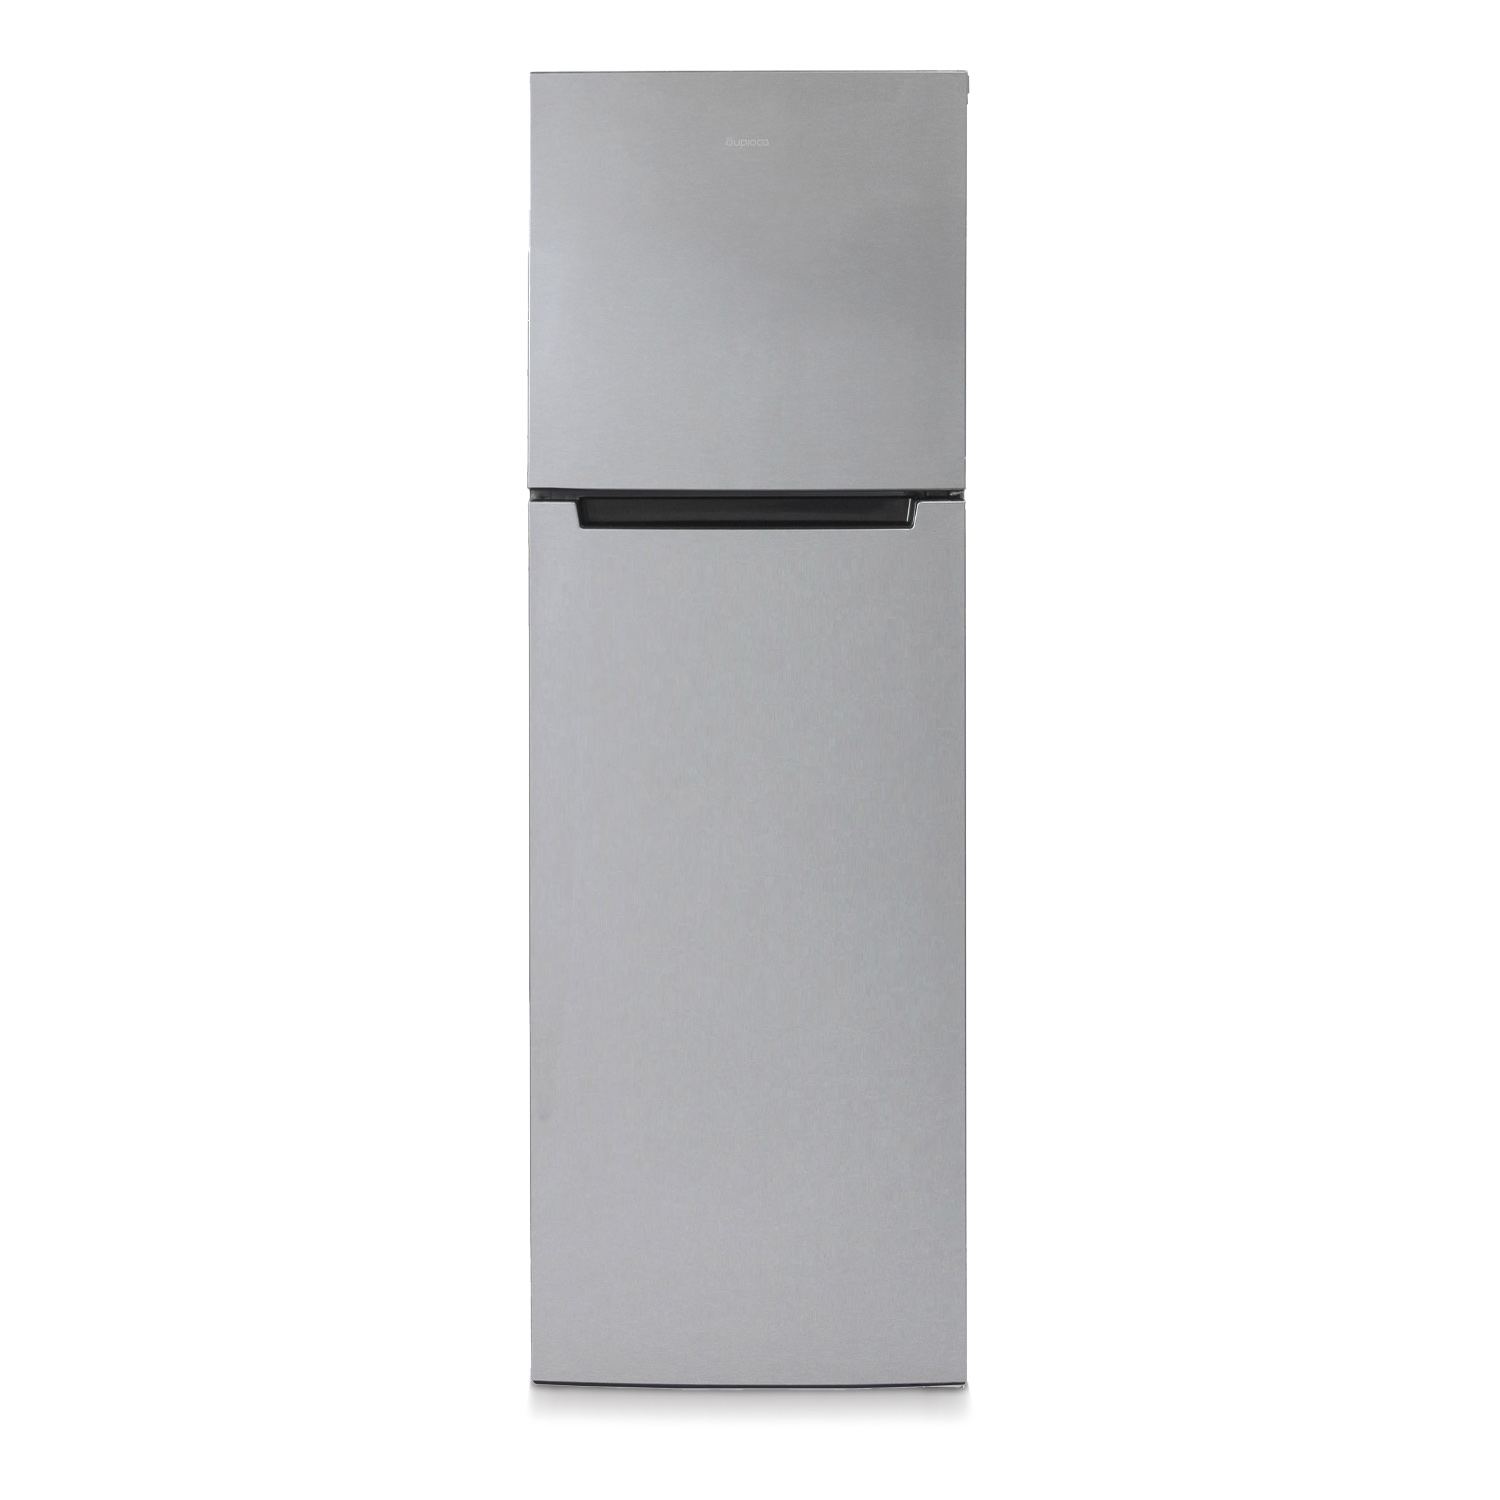 Холодильник Бирюса C6039 серебристый холодильник бирюса m107 серебристый